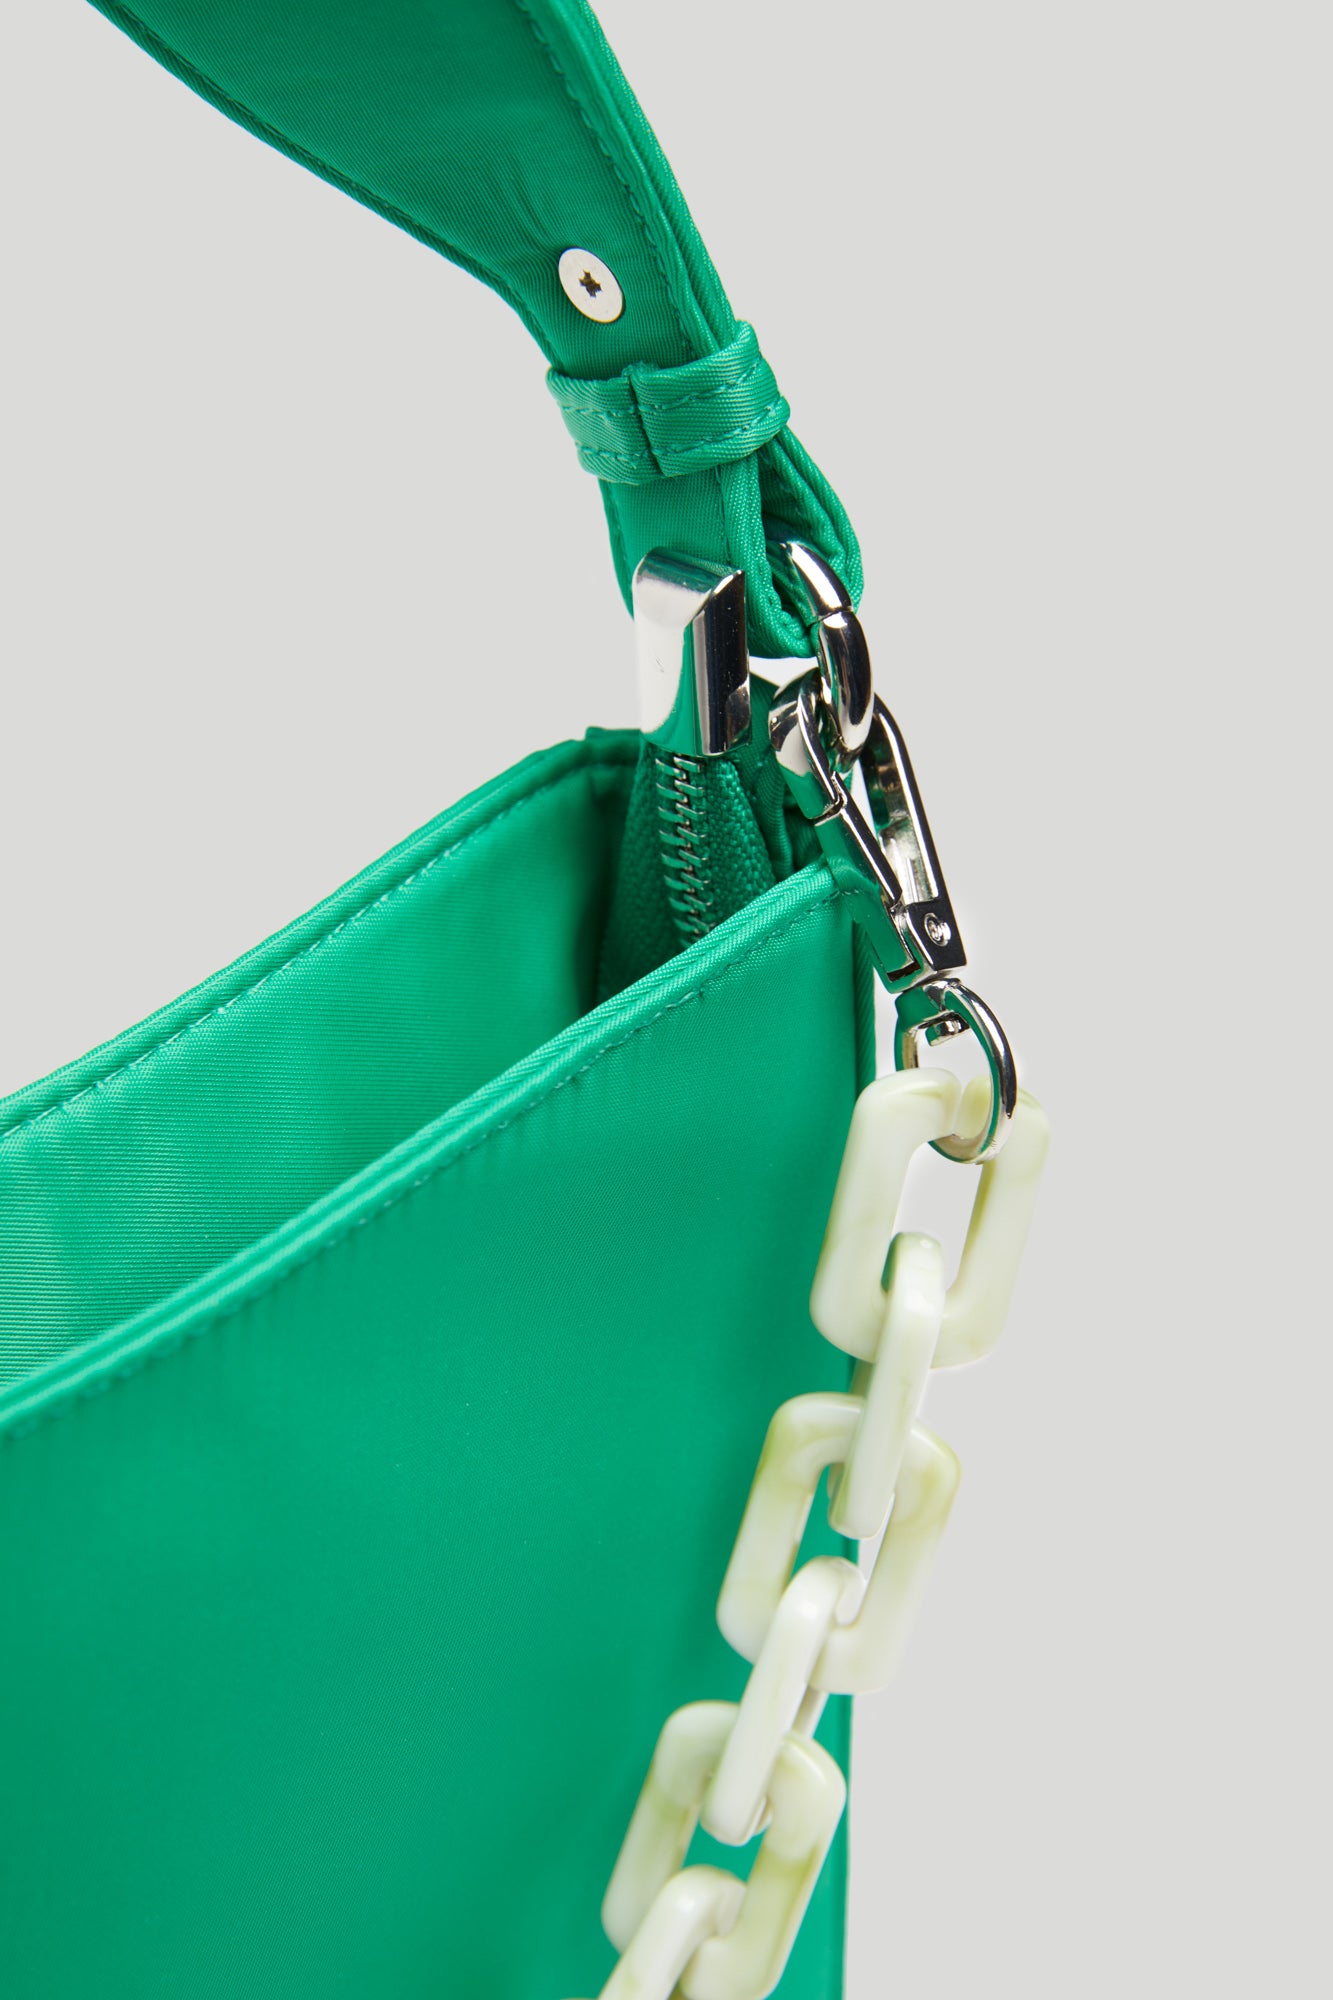 HVISK Amble Bag aus grünem recyceltem Nylon